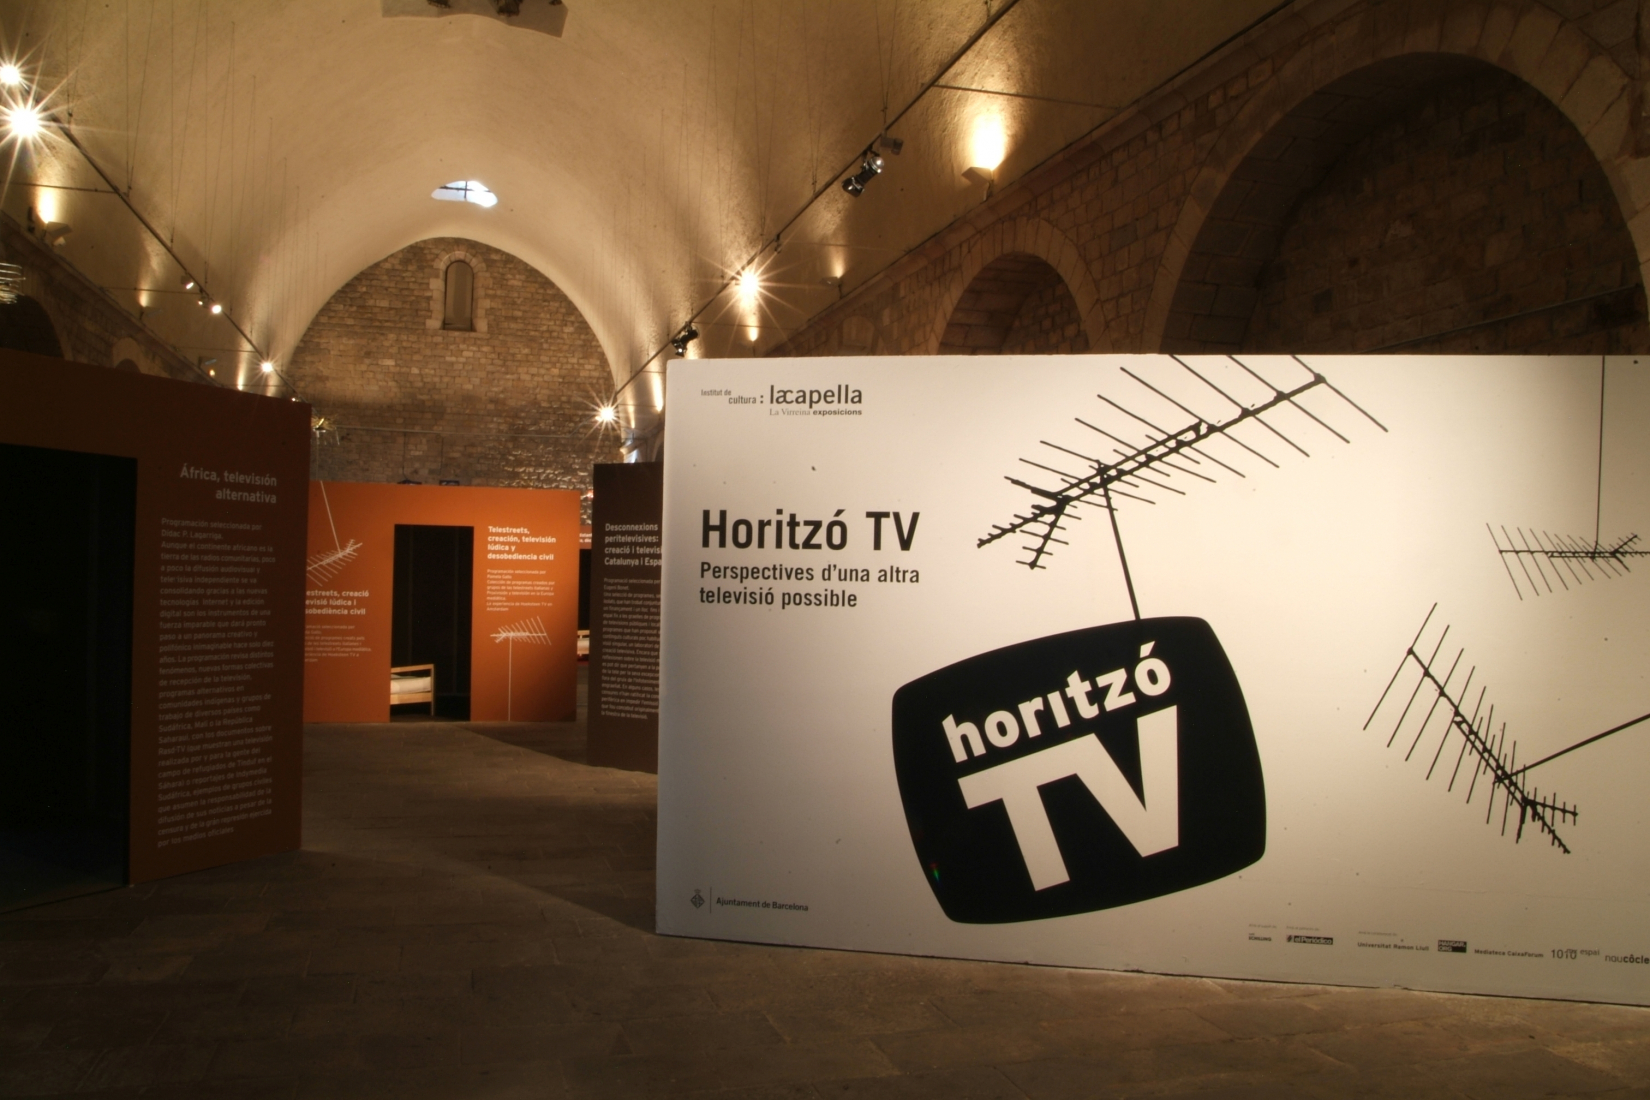 HoritzóTV